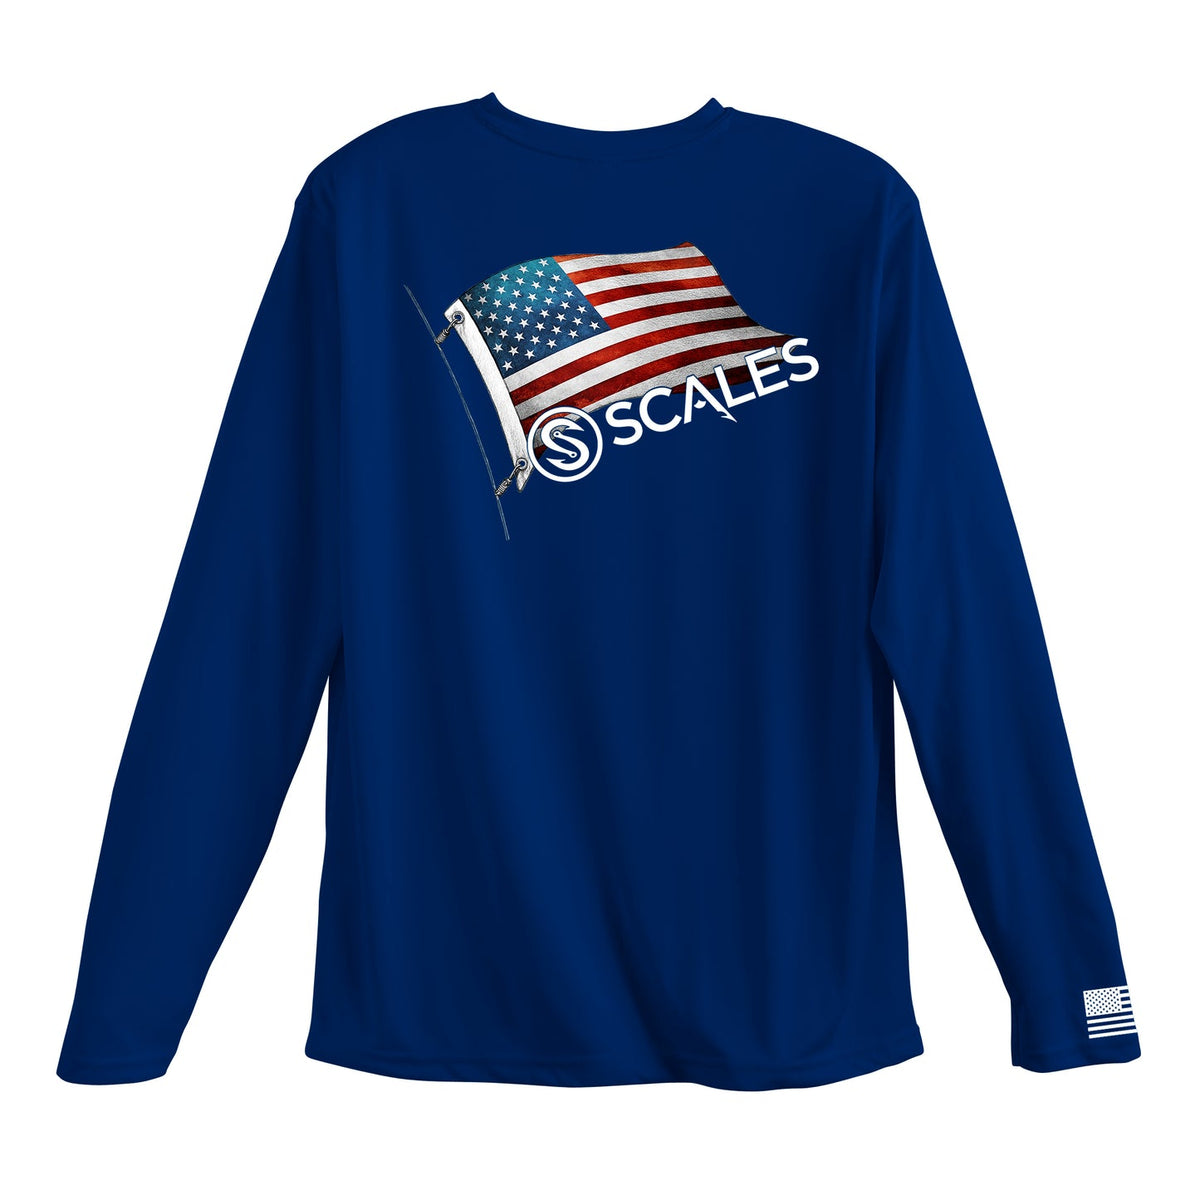 SCALES Rasie Flags USA Long Sleeve Performance Shirt